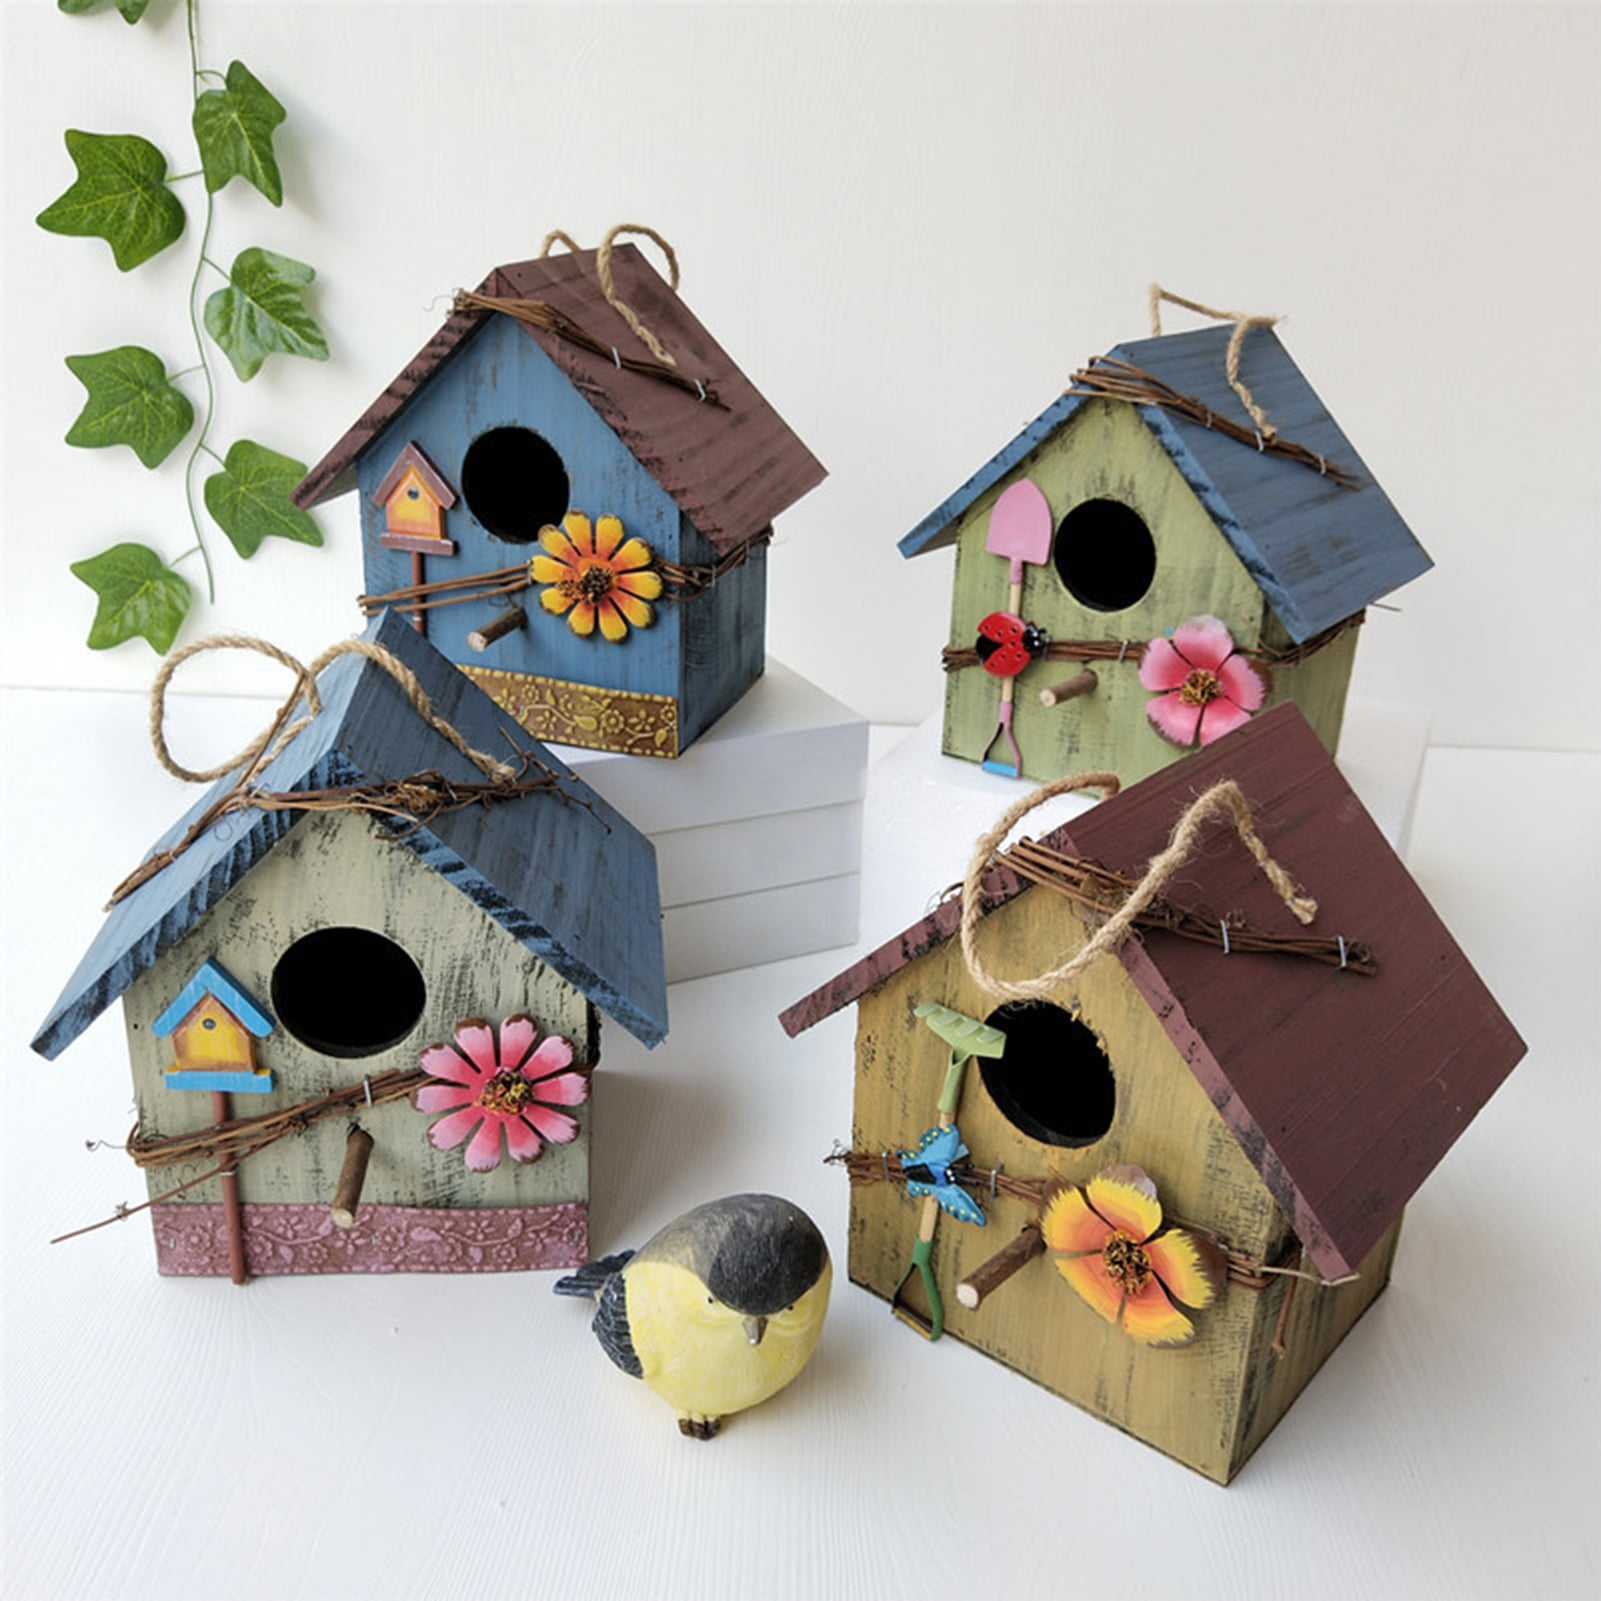 3xHumming Bird Houses For Outside Hanging Natural Grass Hand Woven Bird Nest Hut 